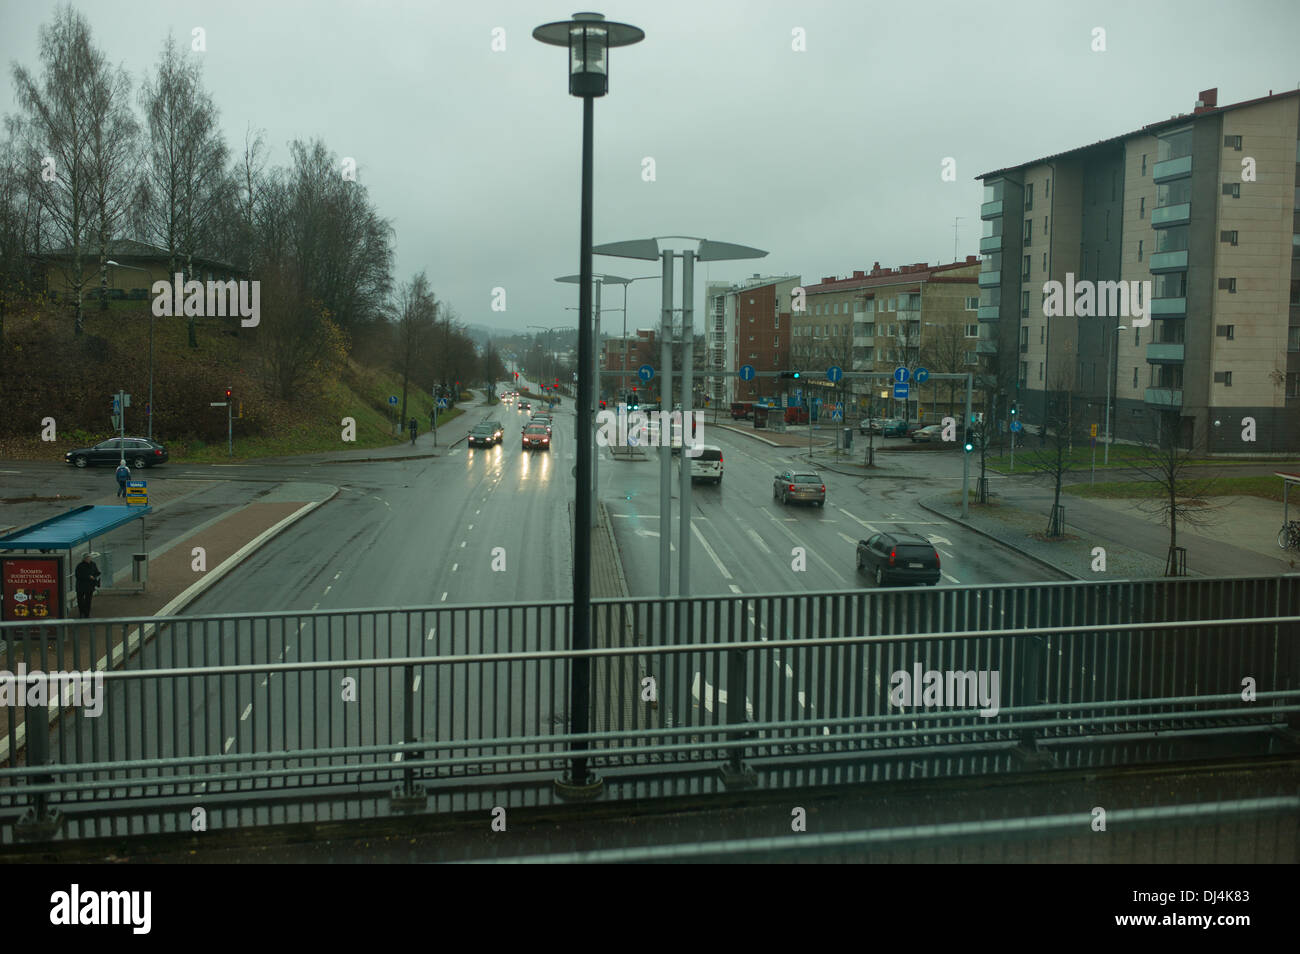 railway,bridge,train,Allegro,Finland,road,cars,cloudy,rain,railway station,house,building,people,city,town,urban, Stock Photo